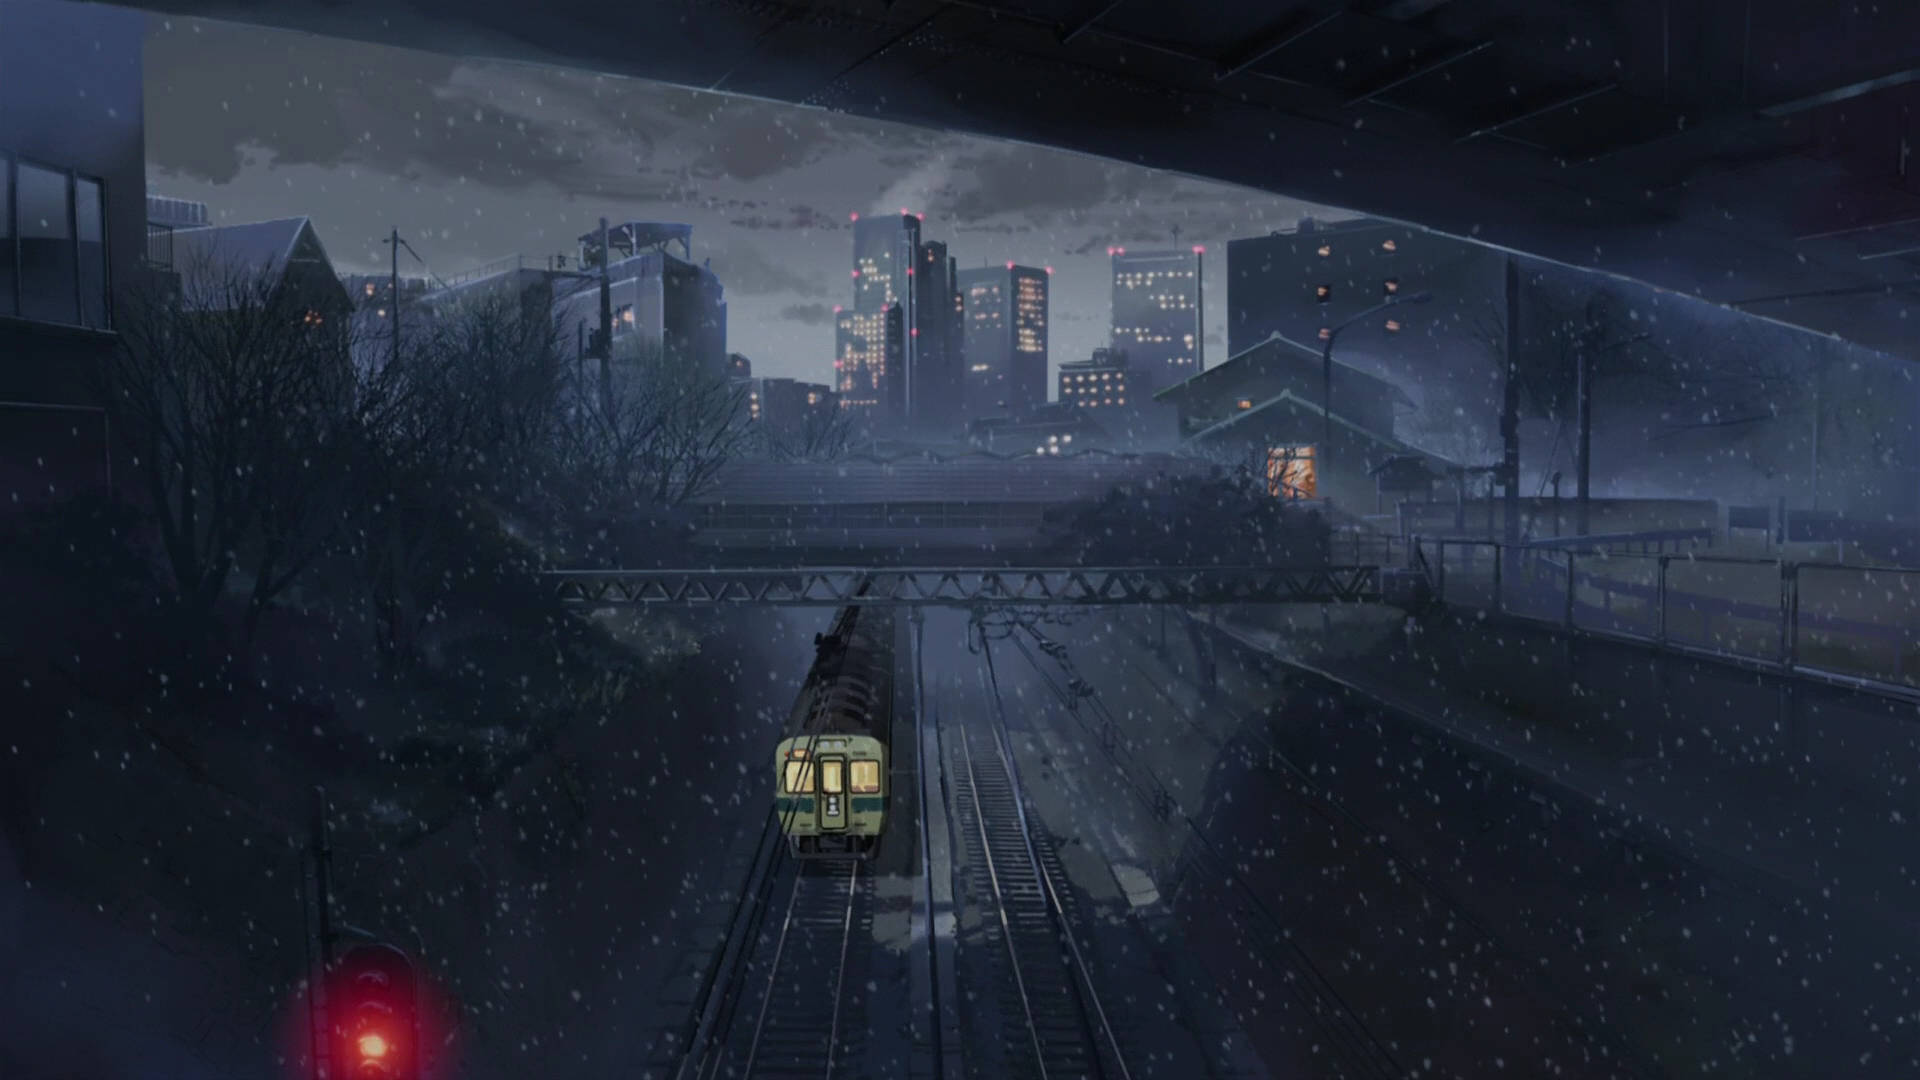 Makoto Shinkai Winter Night Aesthetic Background